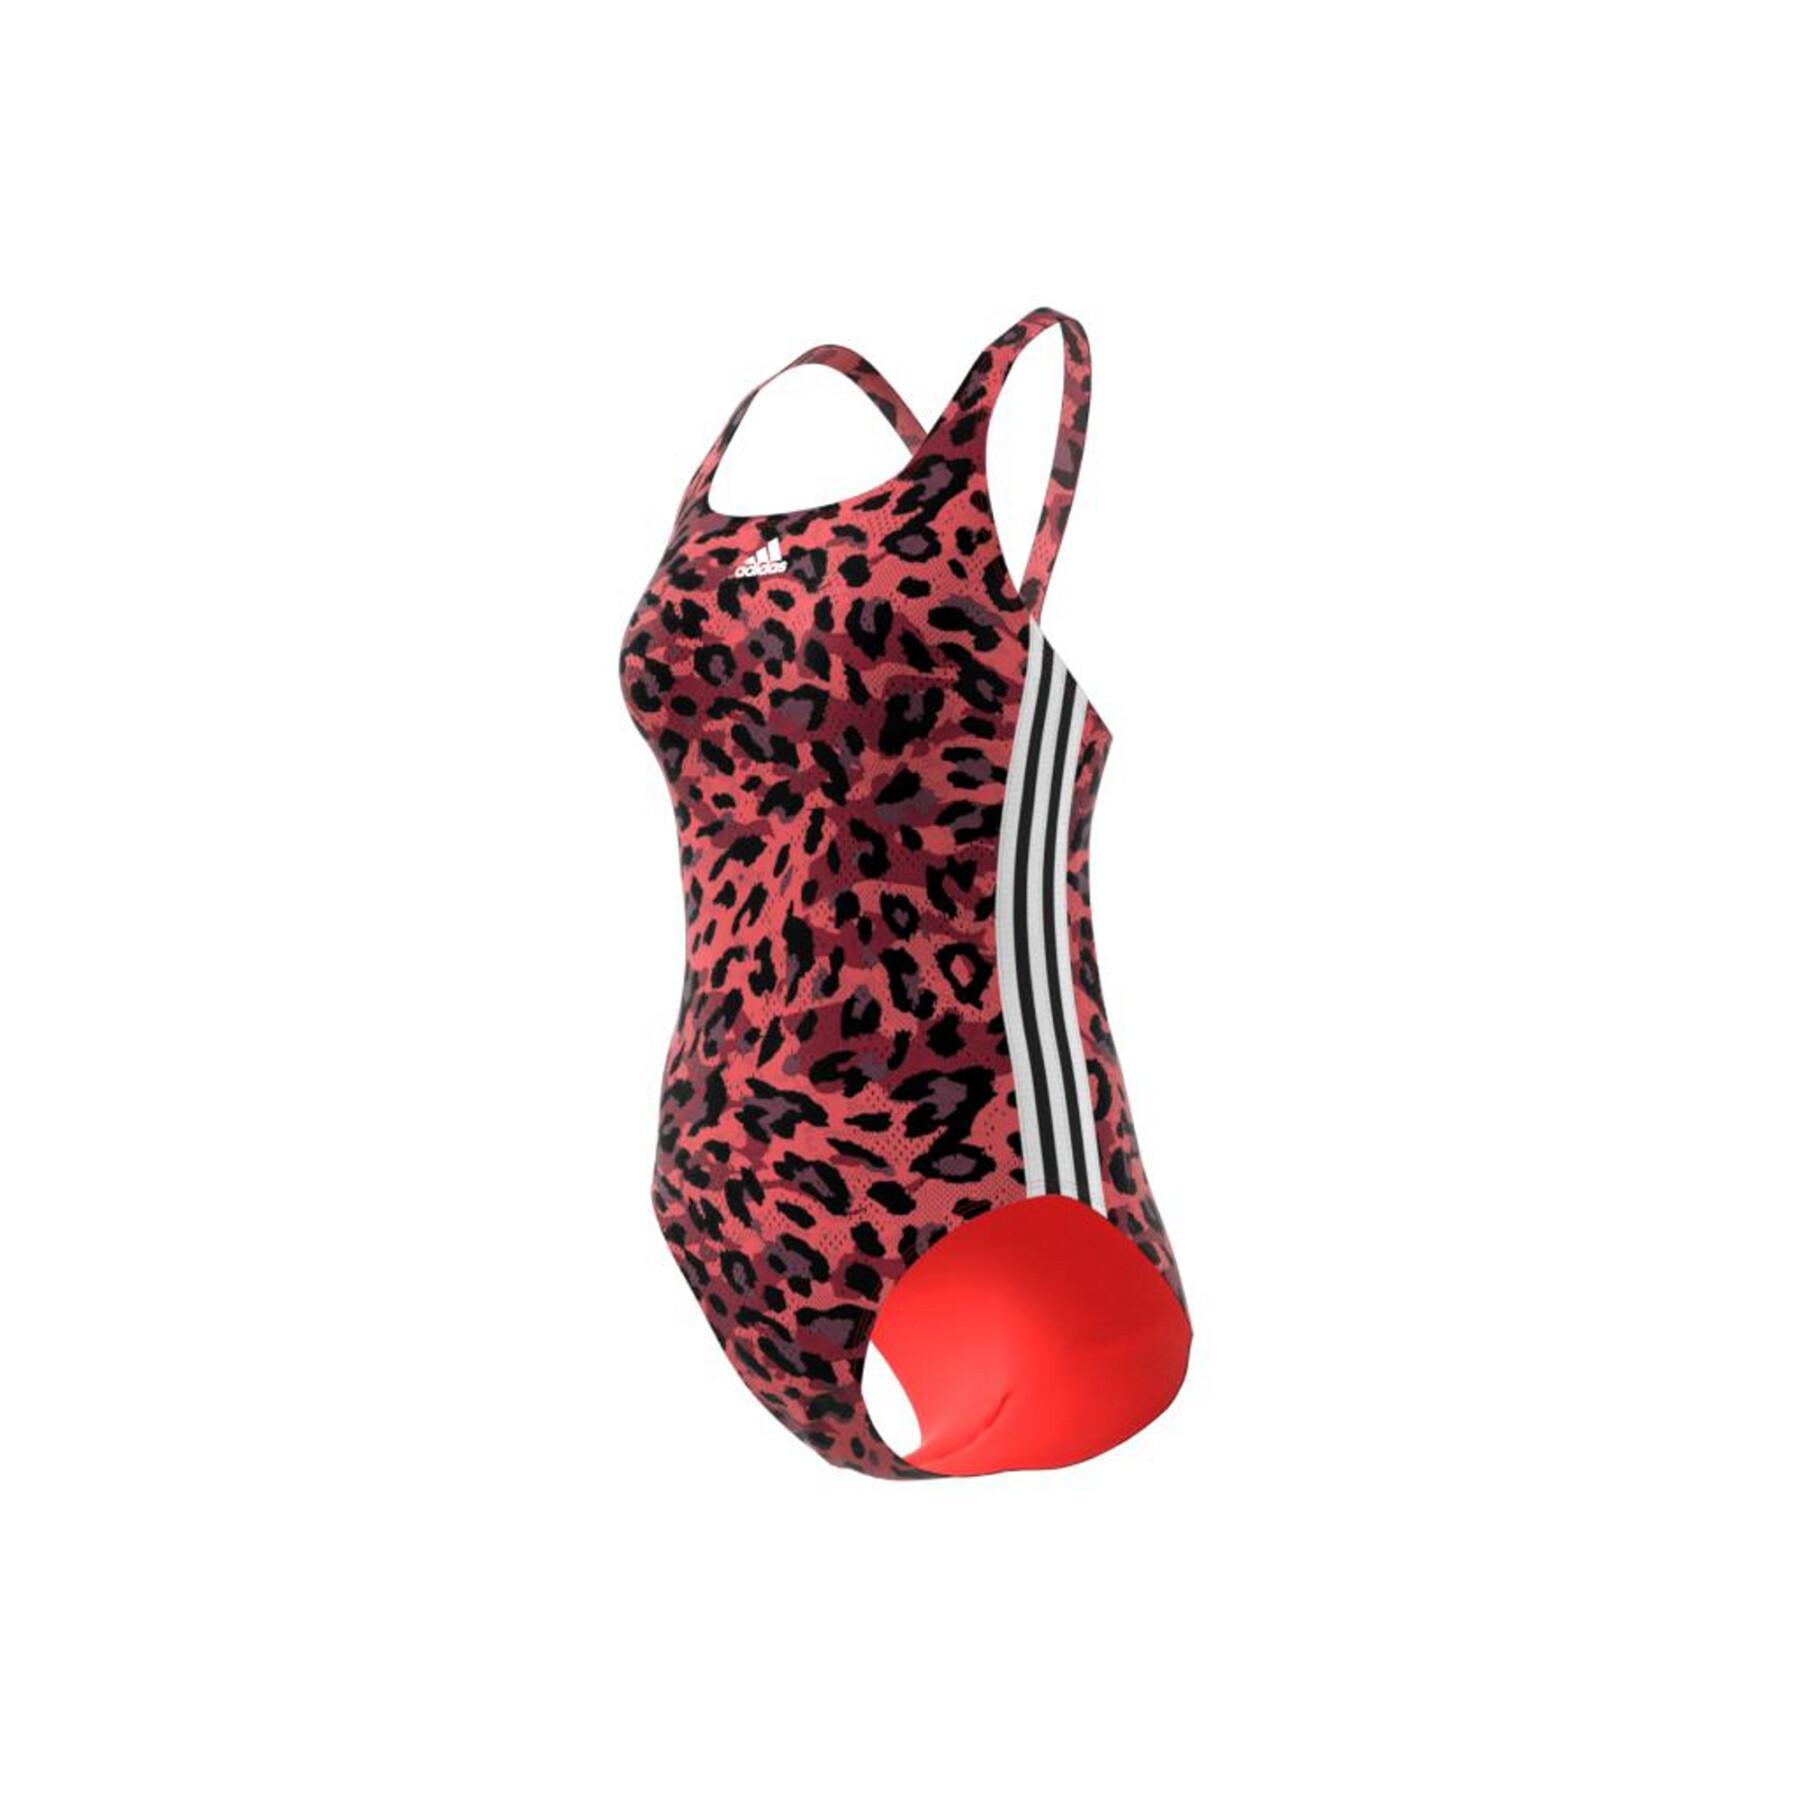 Damski kostium kąpielowy adidas Sh3.Ro Summerglow